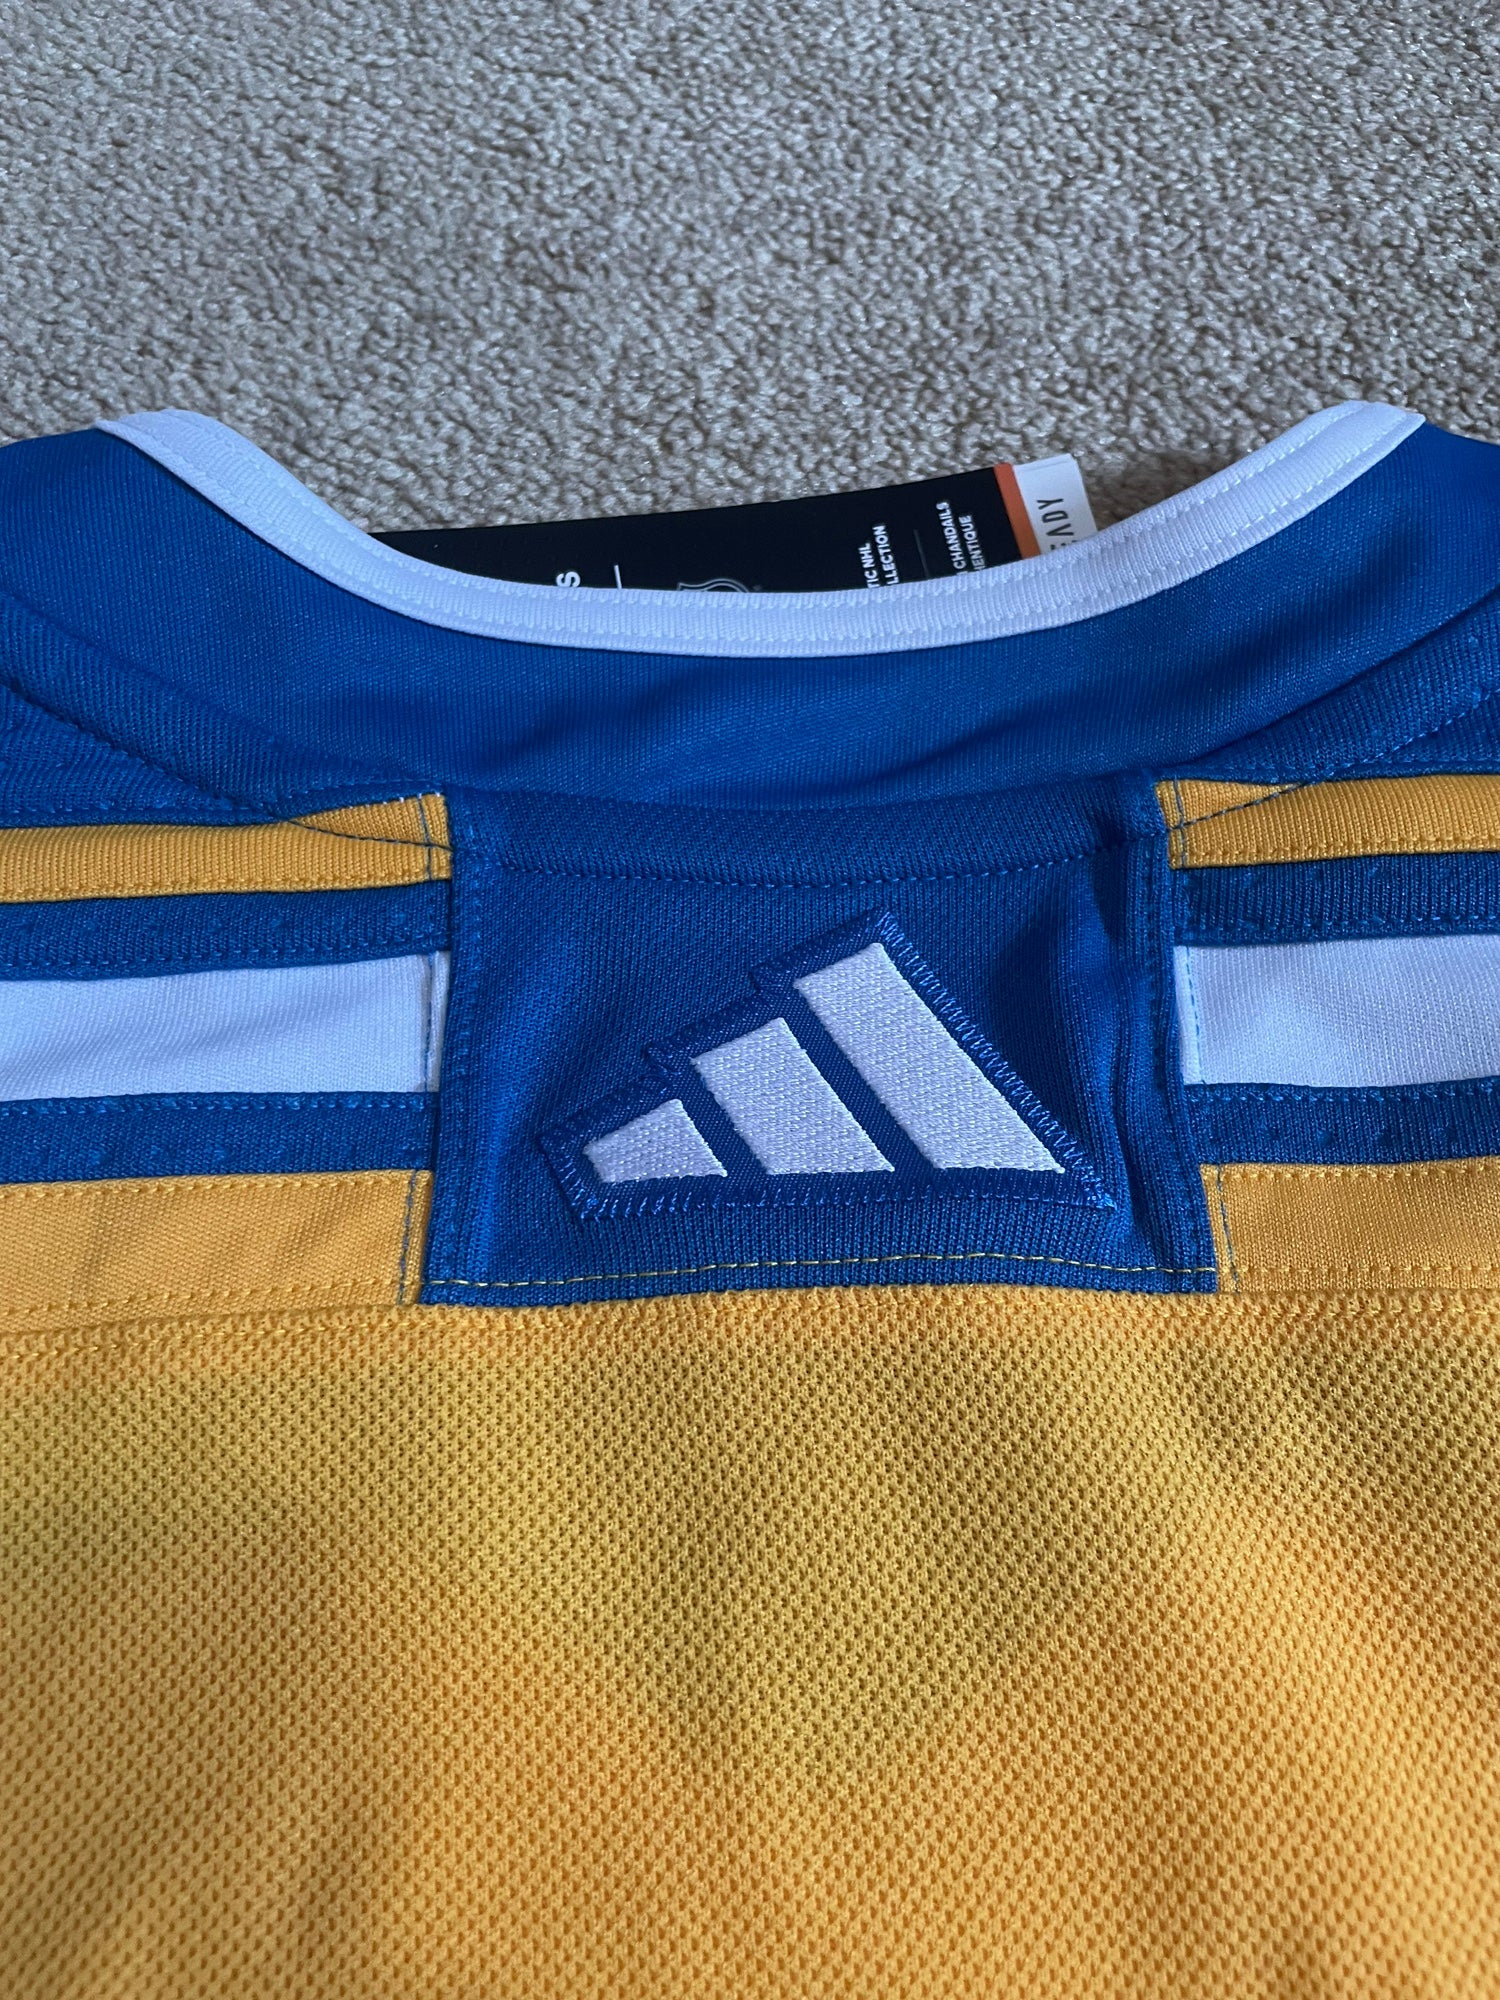 St. Louis Blues Adidas Authentic Retro NHL Hockey Jersey –